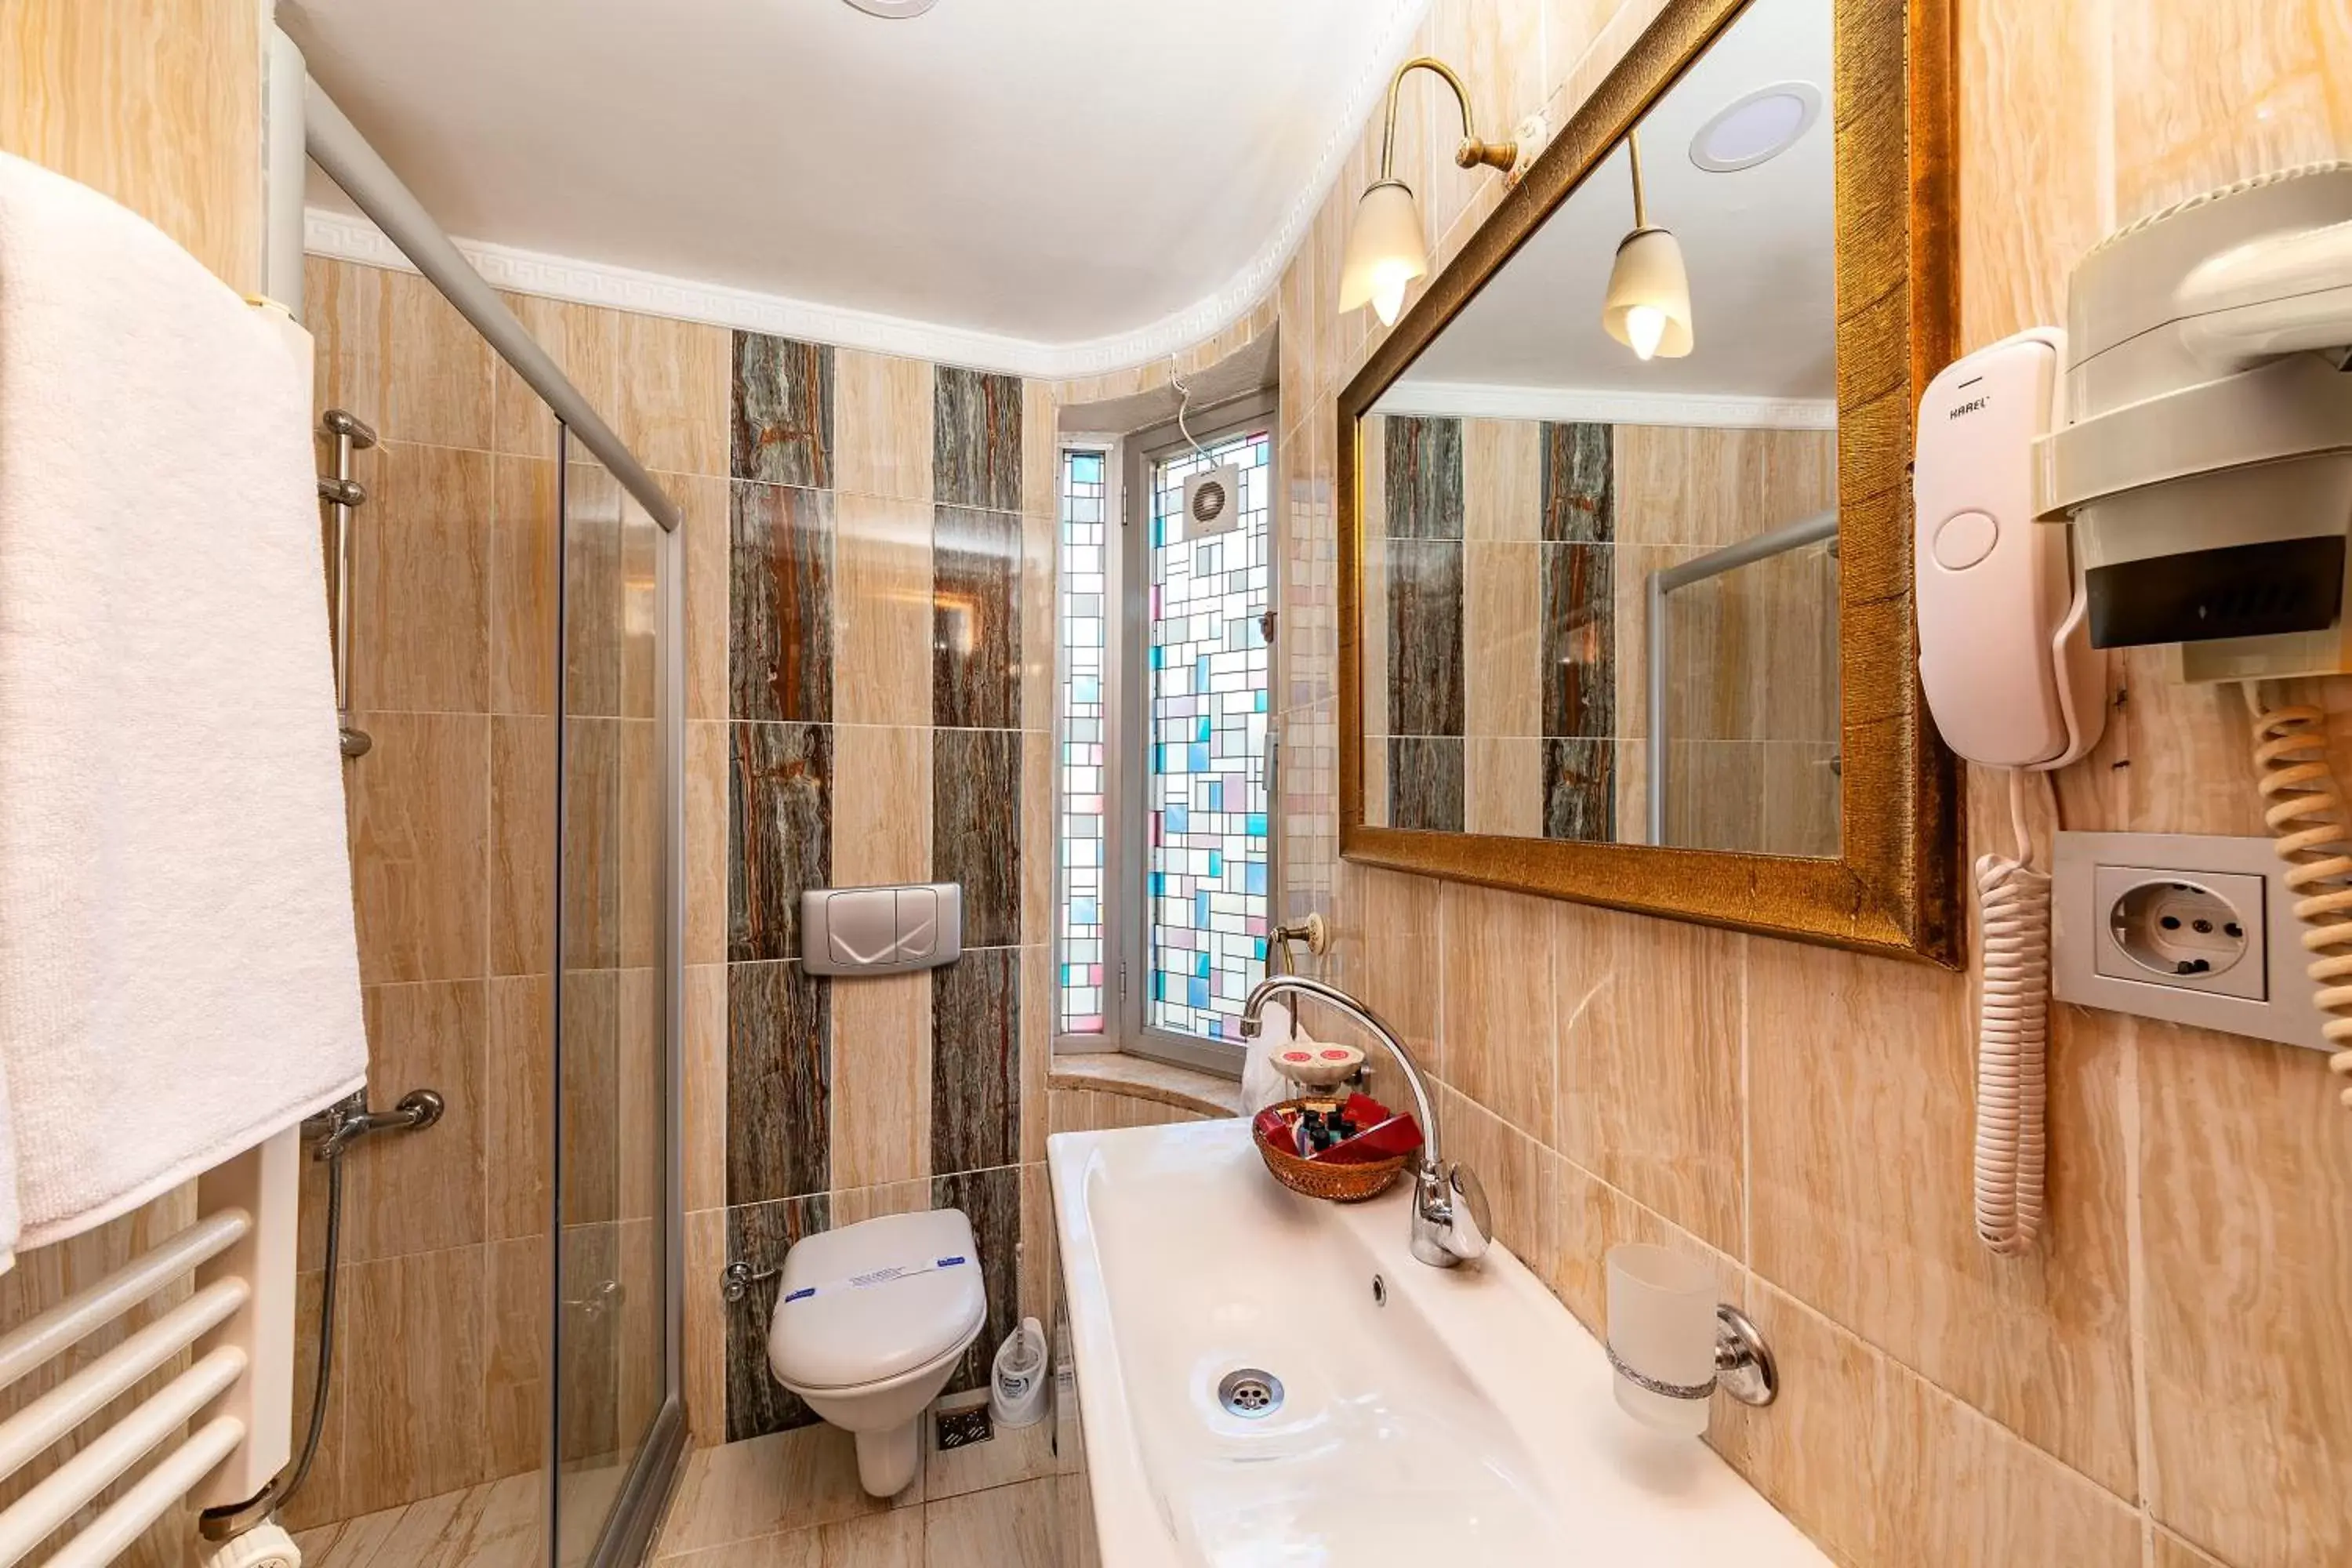 Bathroom in Santa Ottoman Hotel